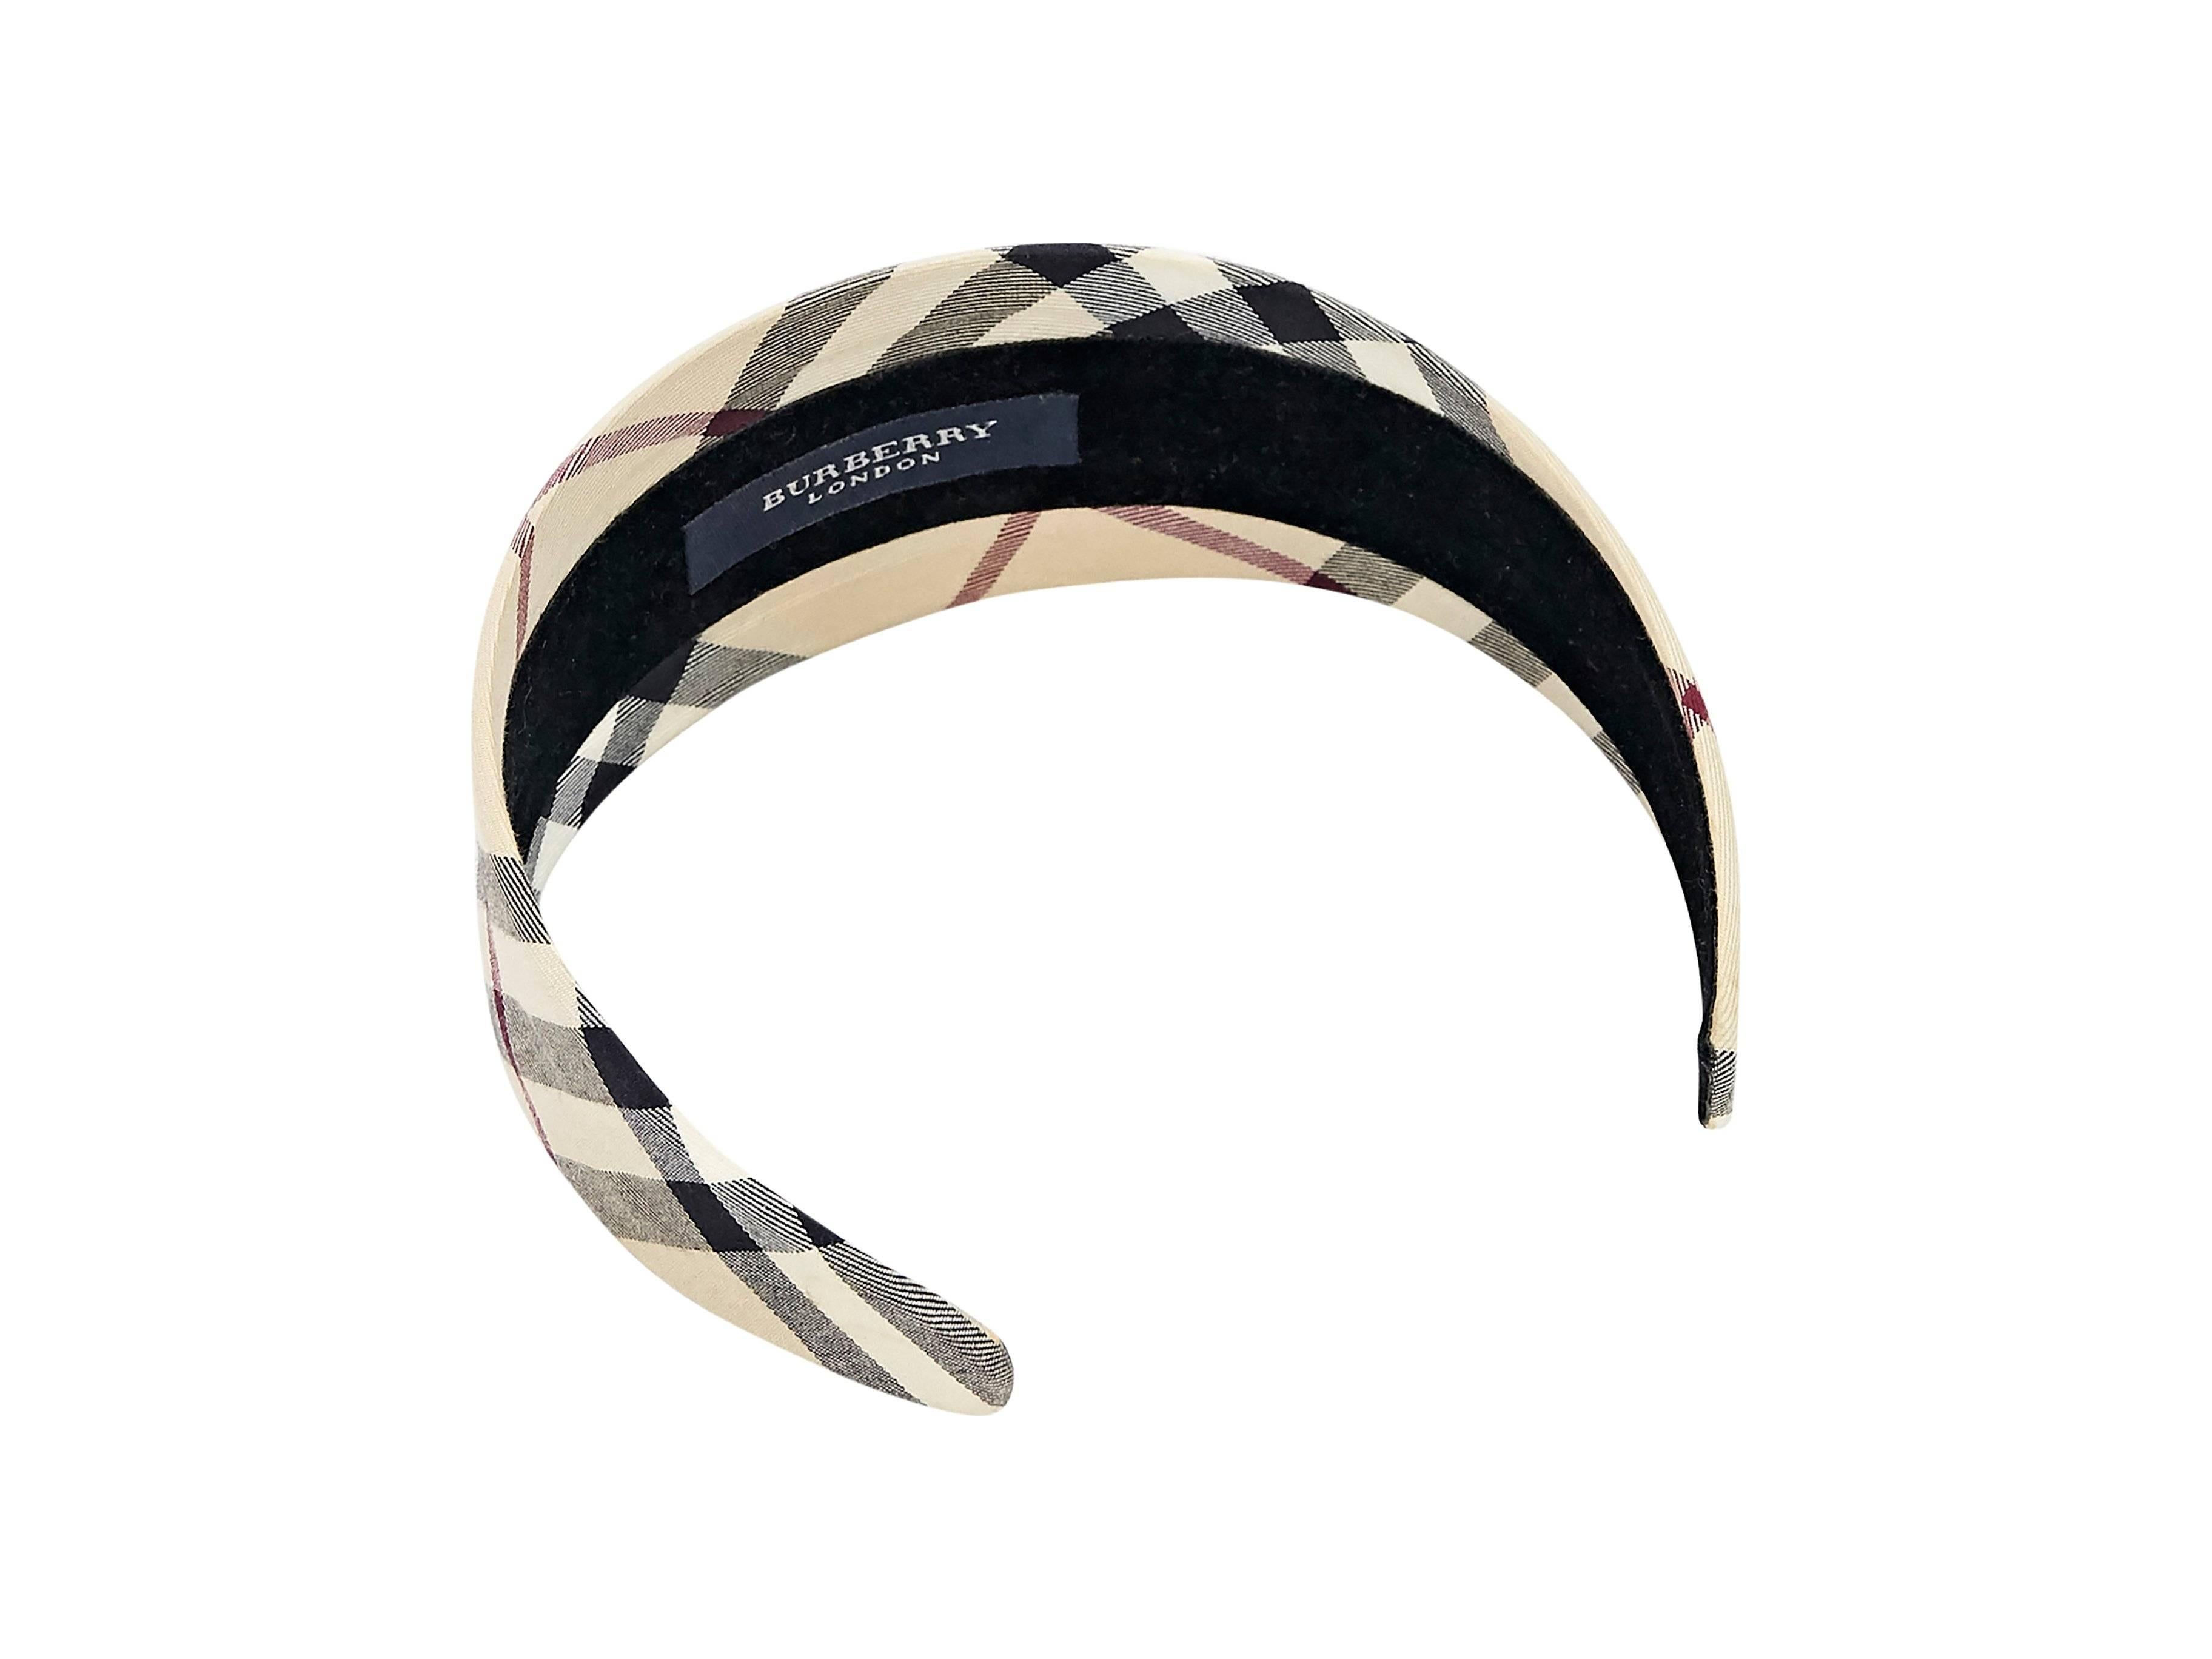 Product details:  Tan nova check headband by Burberry.  2.25